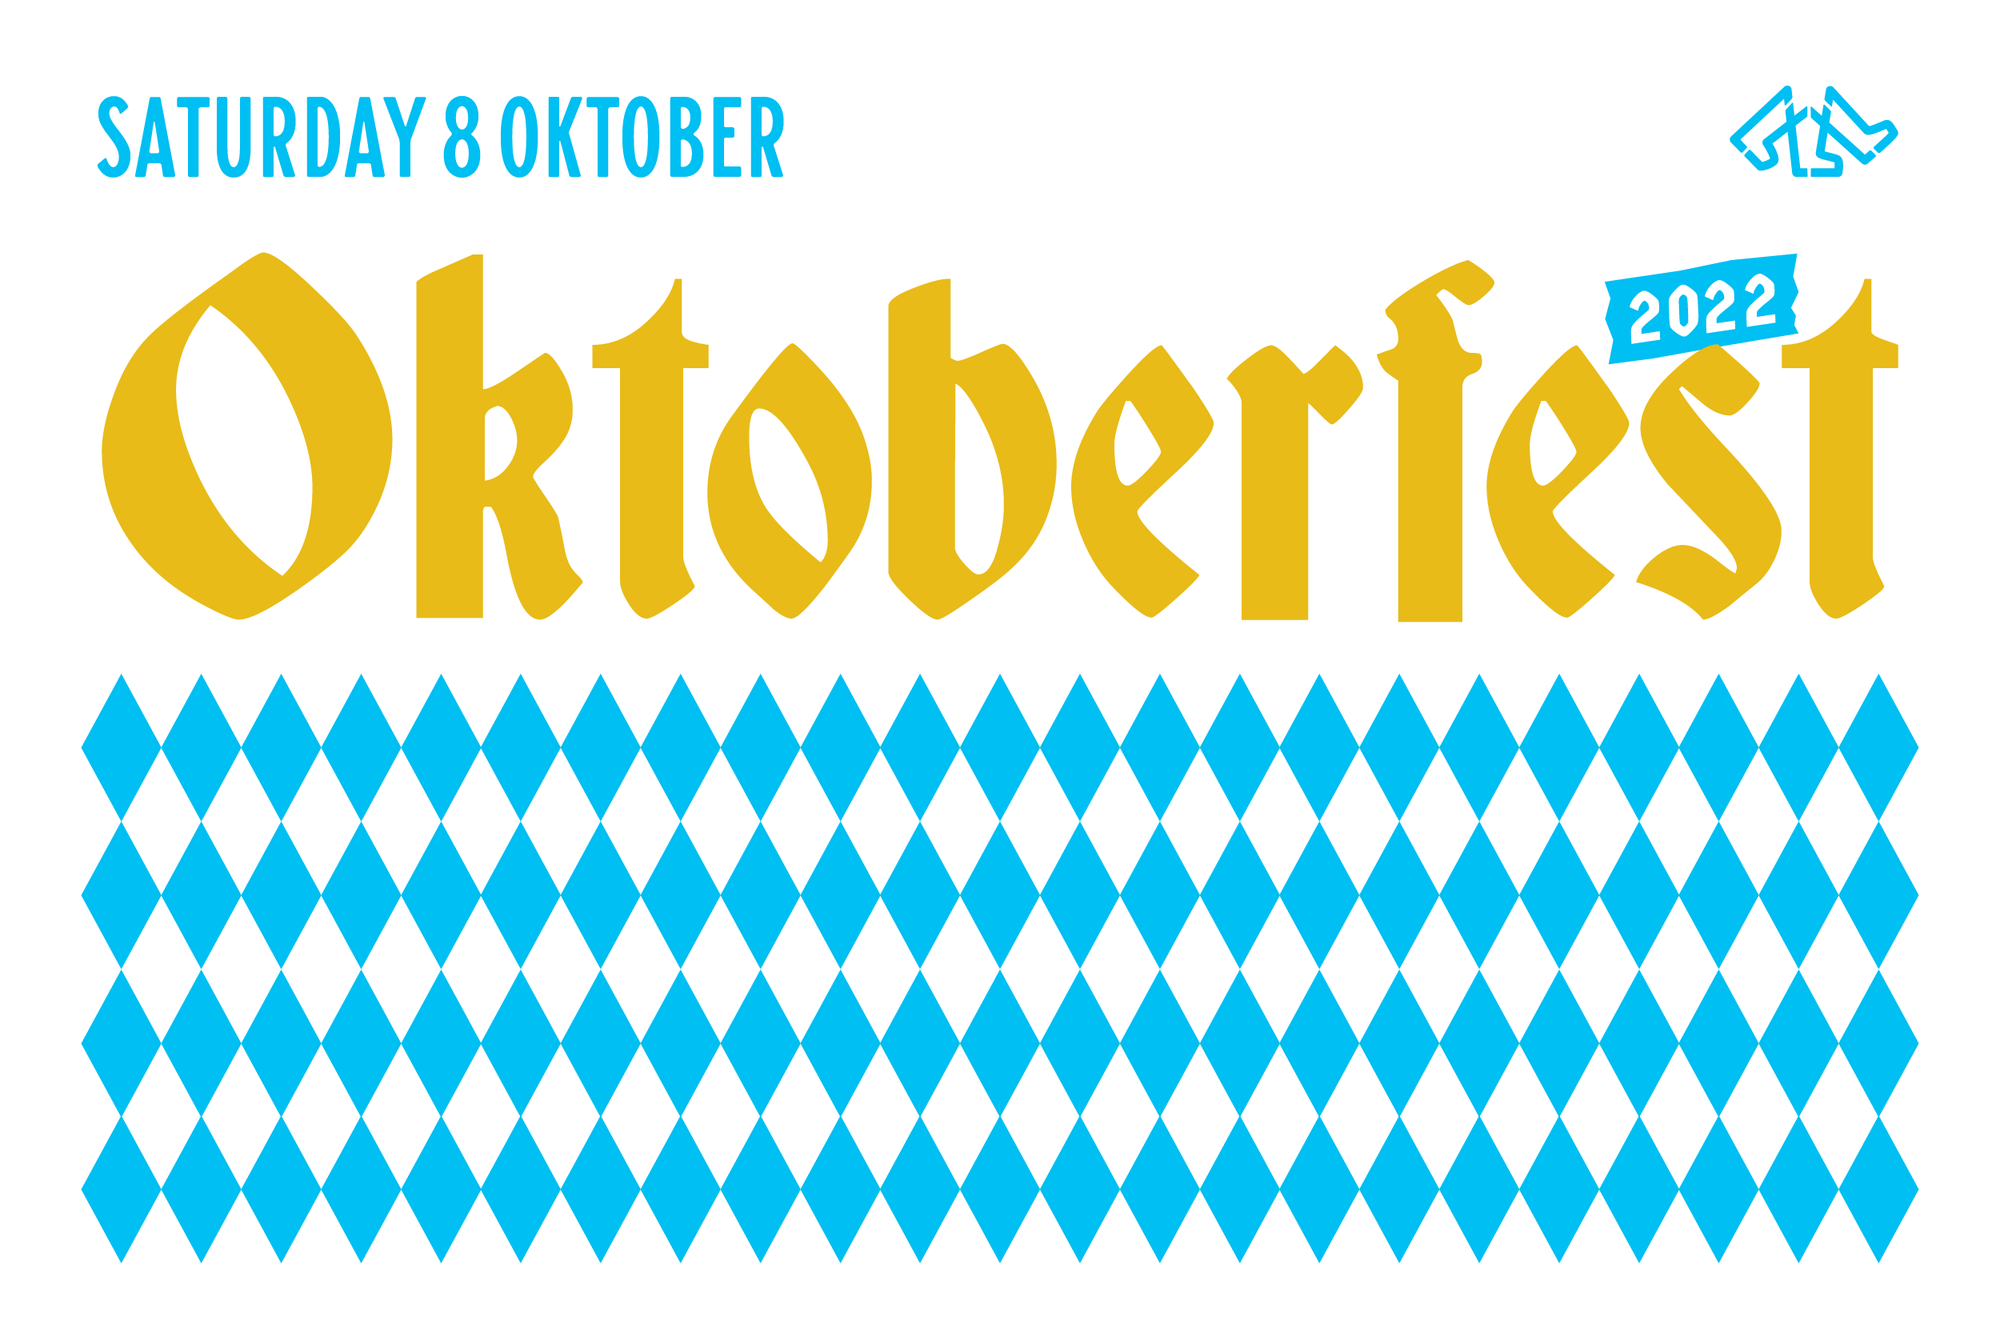 Oktoberfest at the Beer Halls!